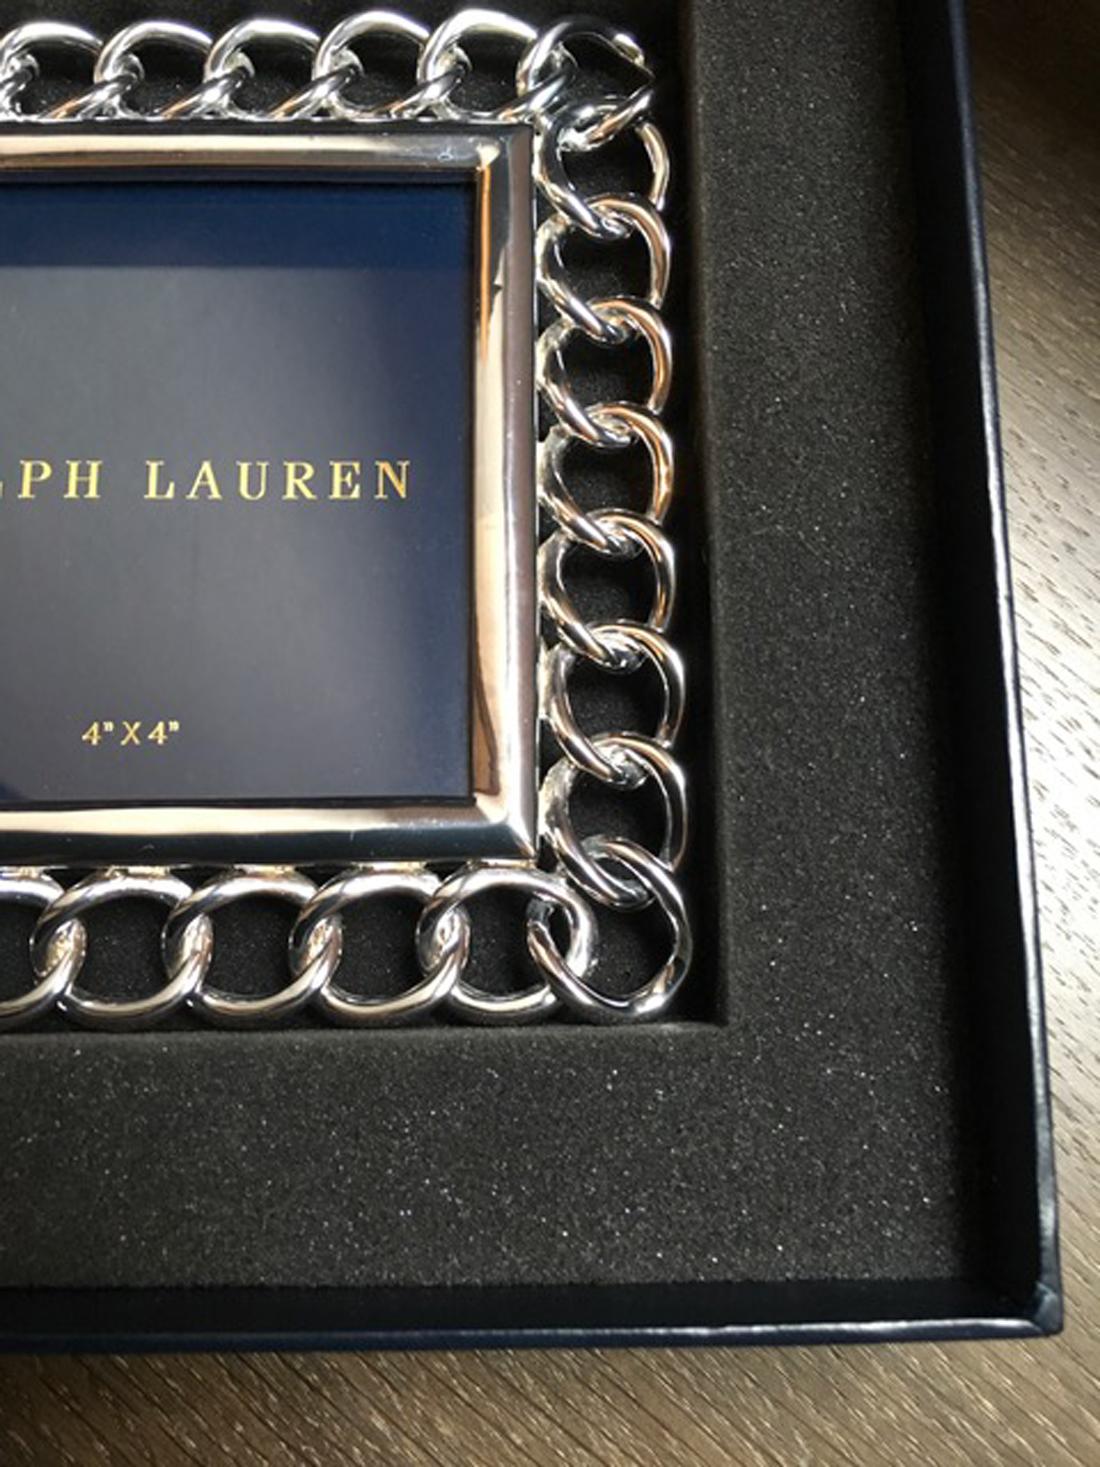 Ralph Lauren Modern Square Chain Chrome Accessories Desk Picture Frame in Stock 4